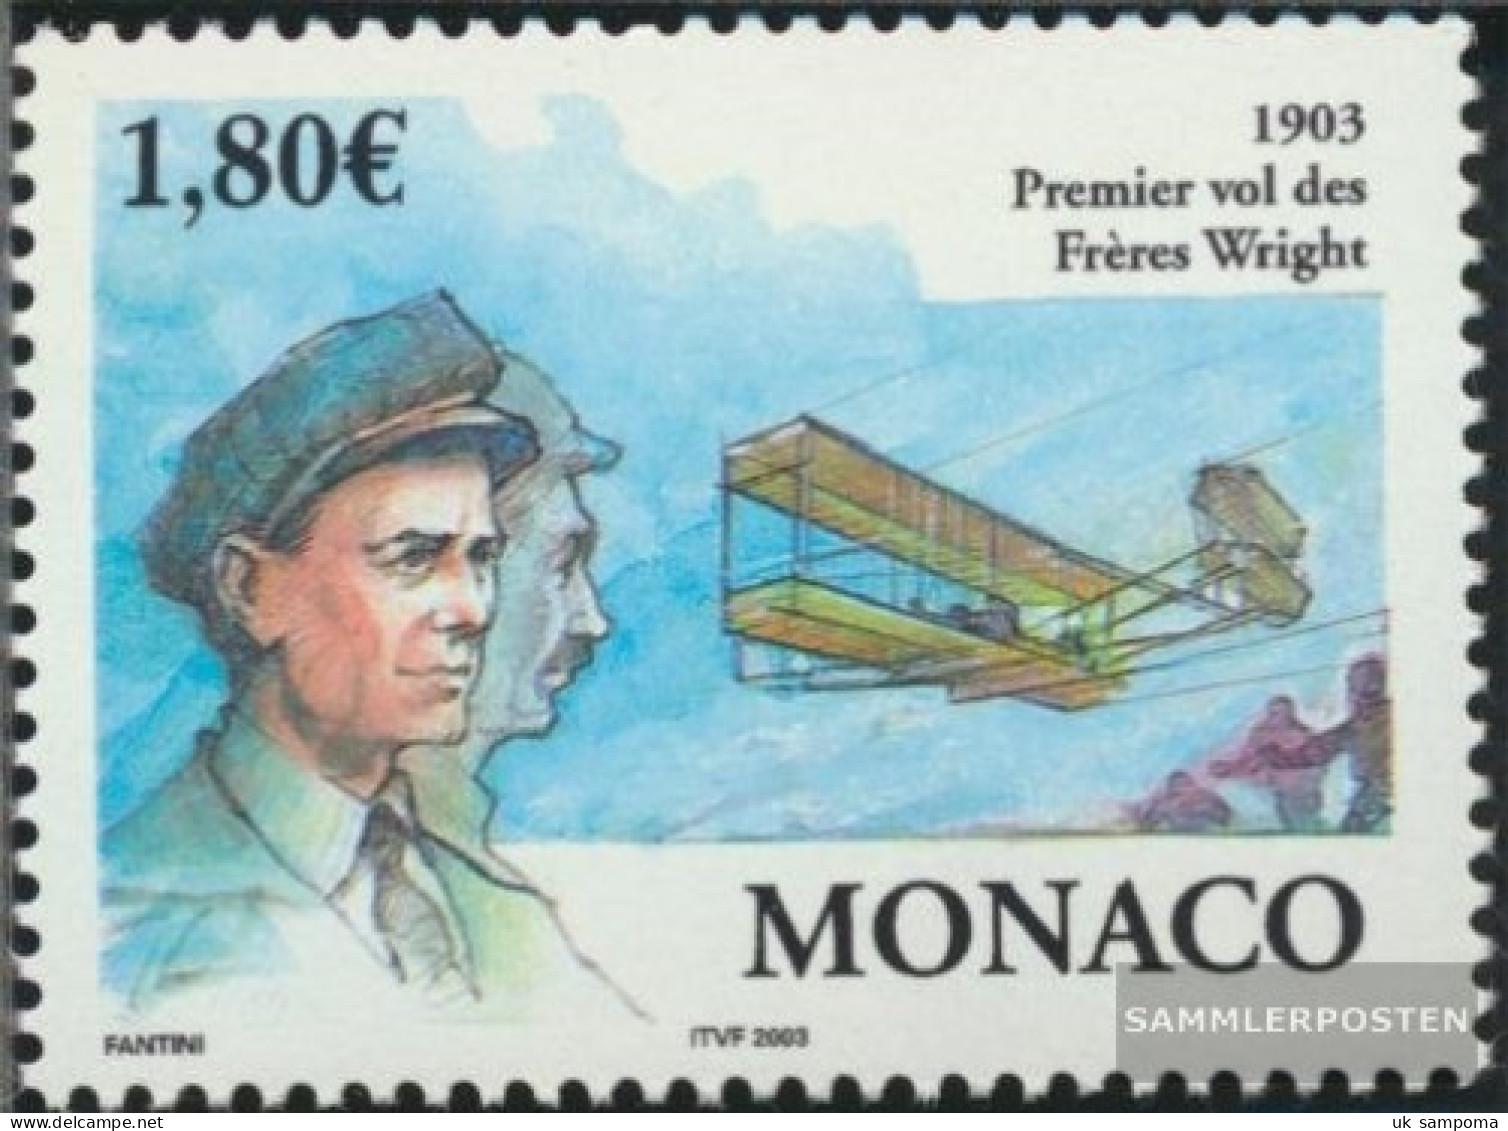 Monaco 2653 (complete Issue) Unmounted Mint / Never Hinged 2003 Motorflug - Ungebraucht